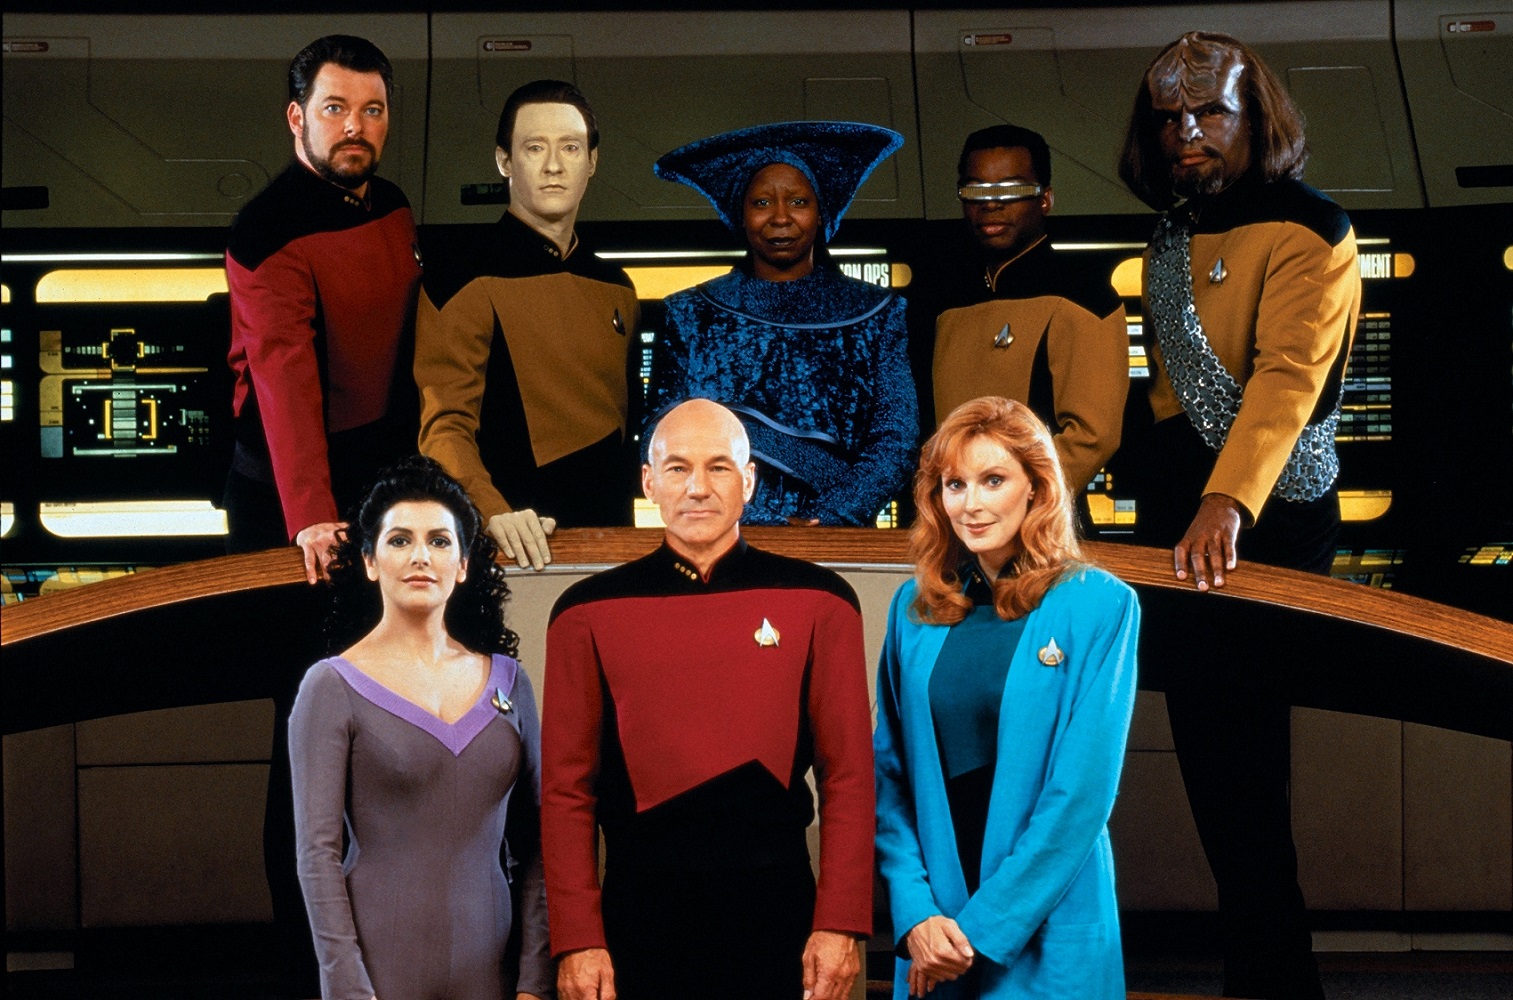 Star Trek TNG uniforms